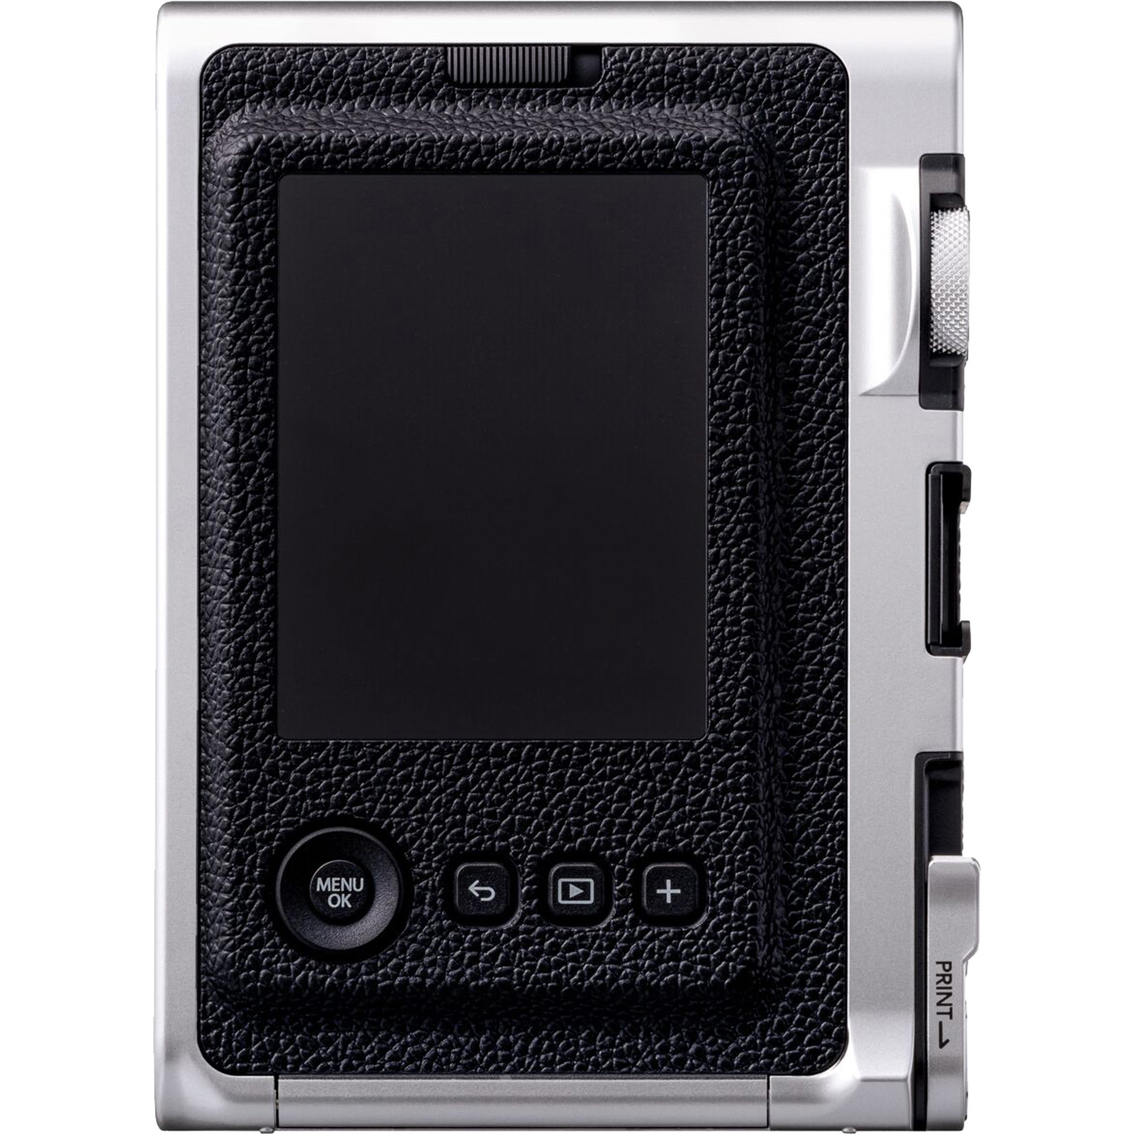 Fujifilm Instax Mini EVO 2-in-1 Instant Photo Camera and Printer with 2.7  inch LCD